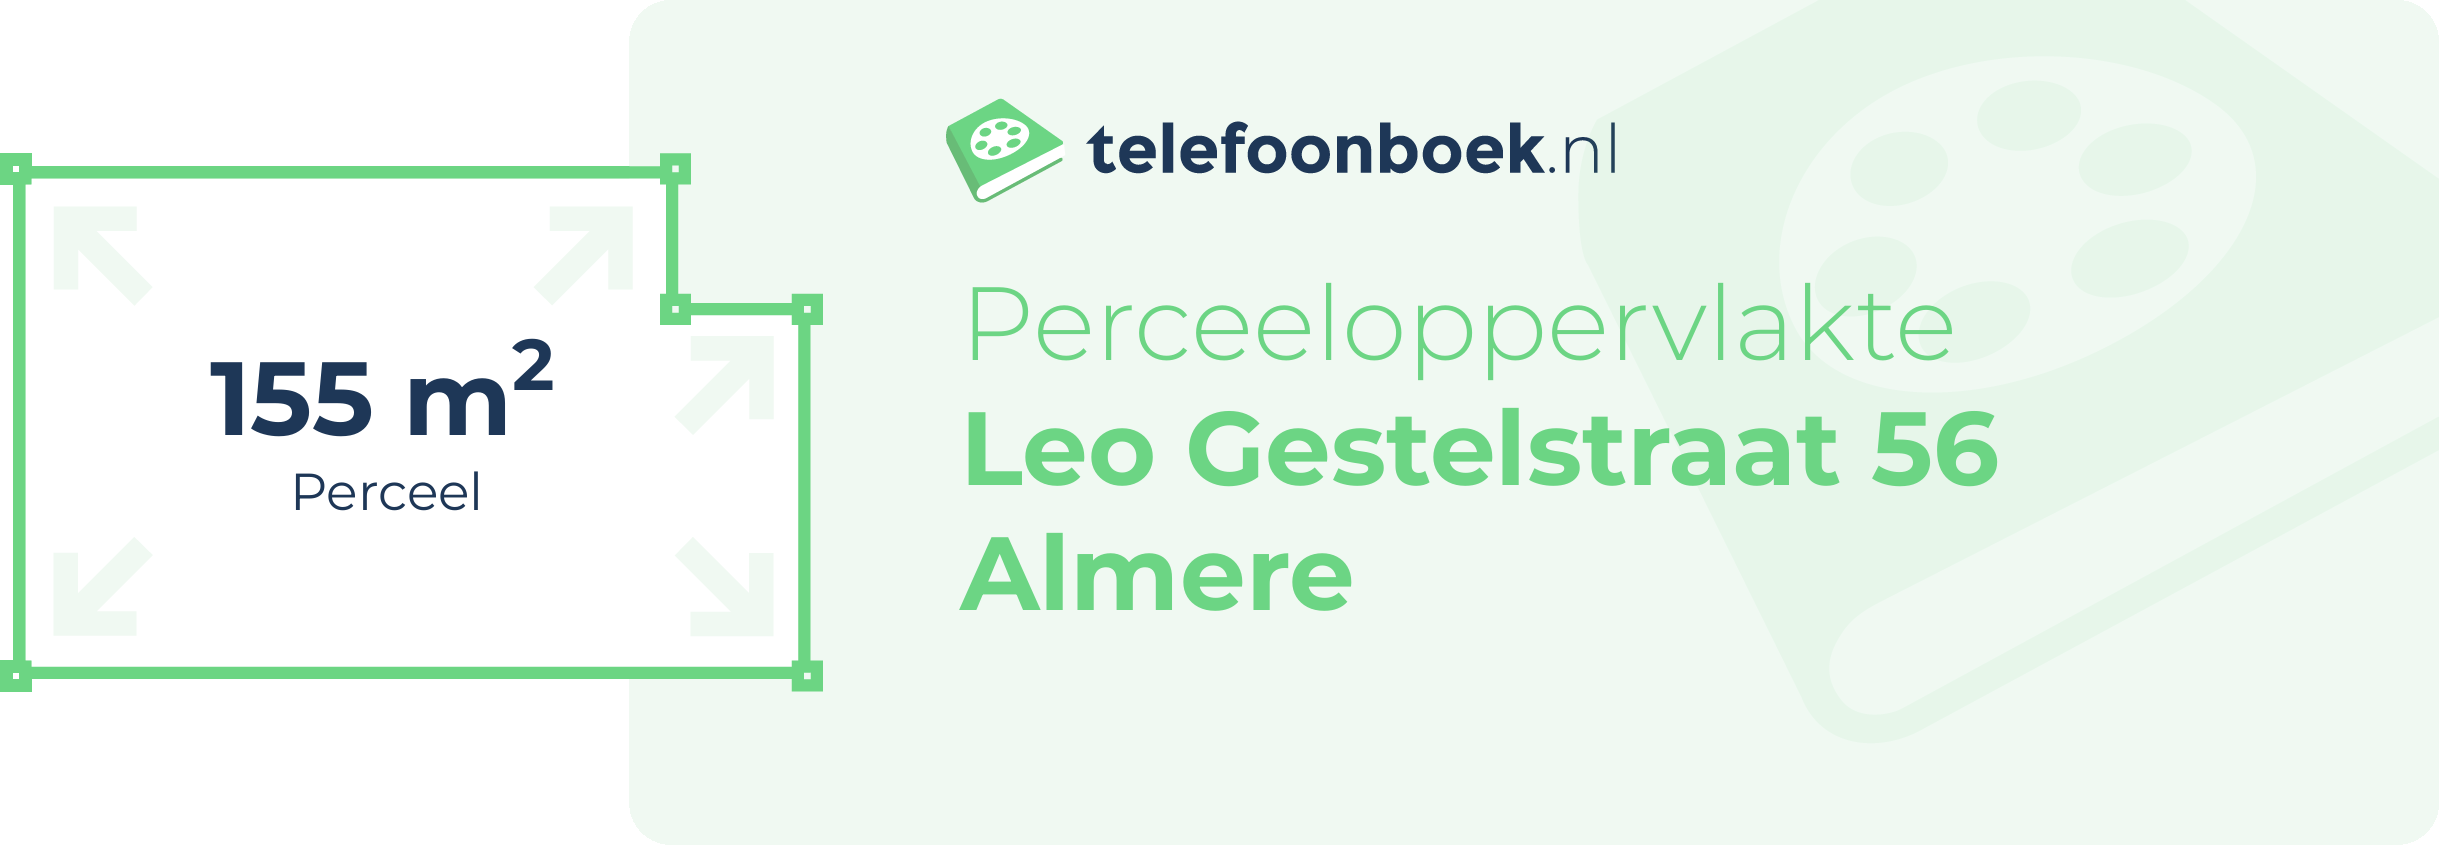 Perceeloppervlakte Leo Gestelstraat 56 Almere